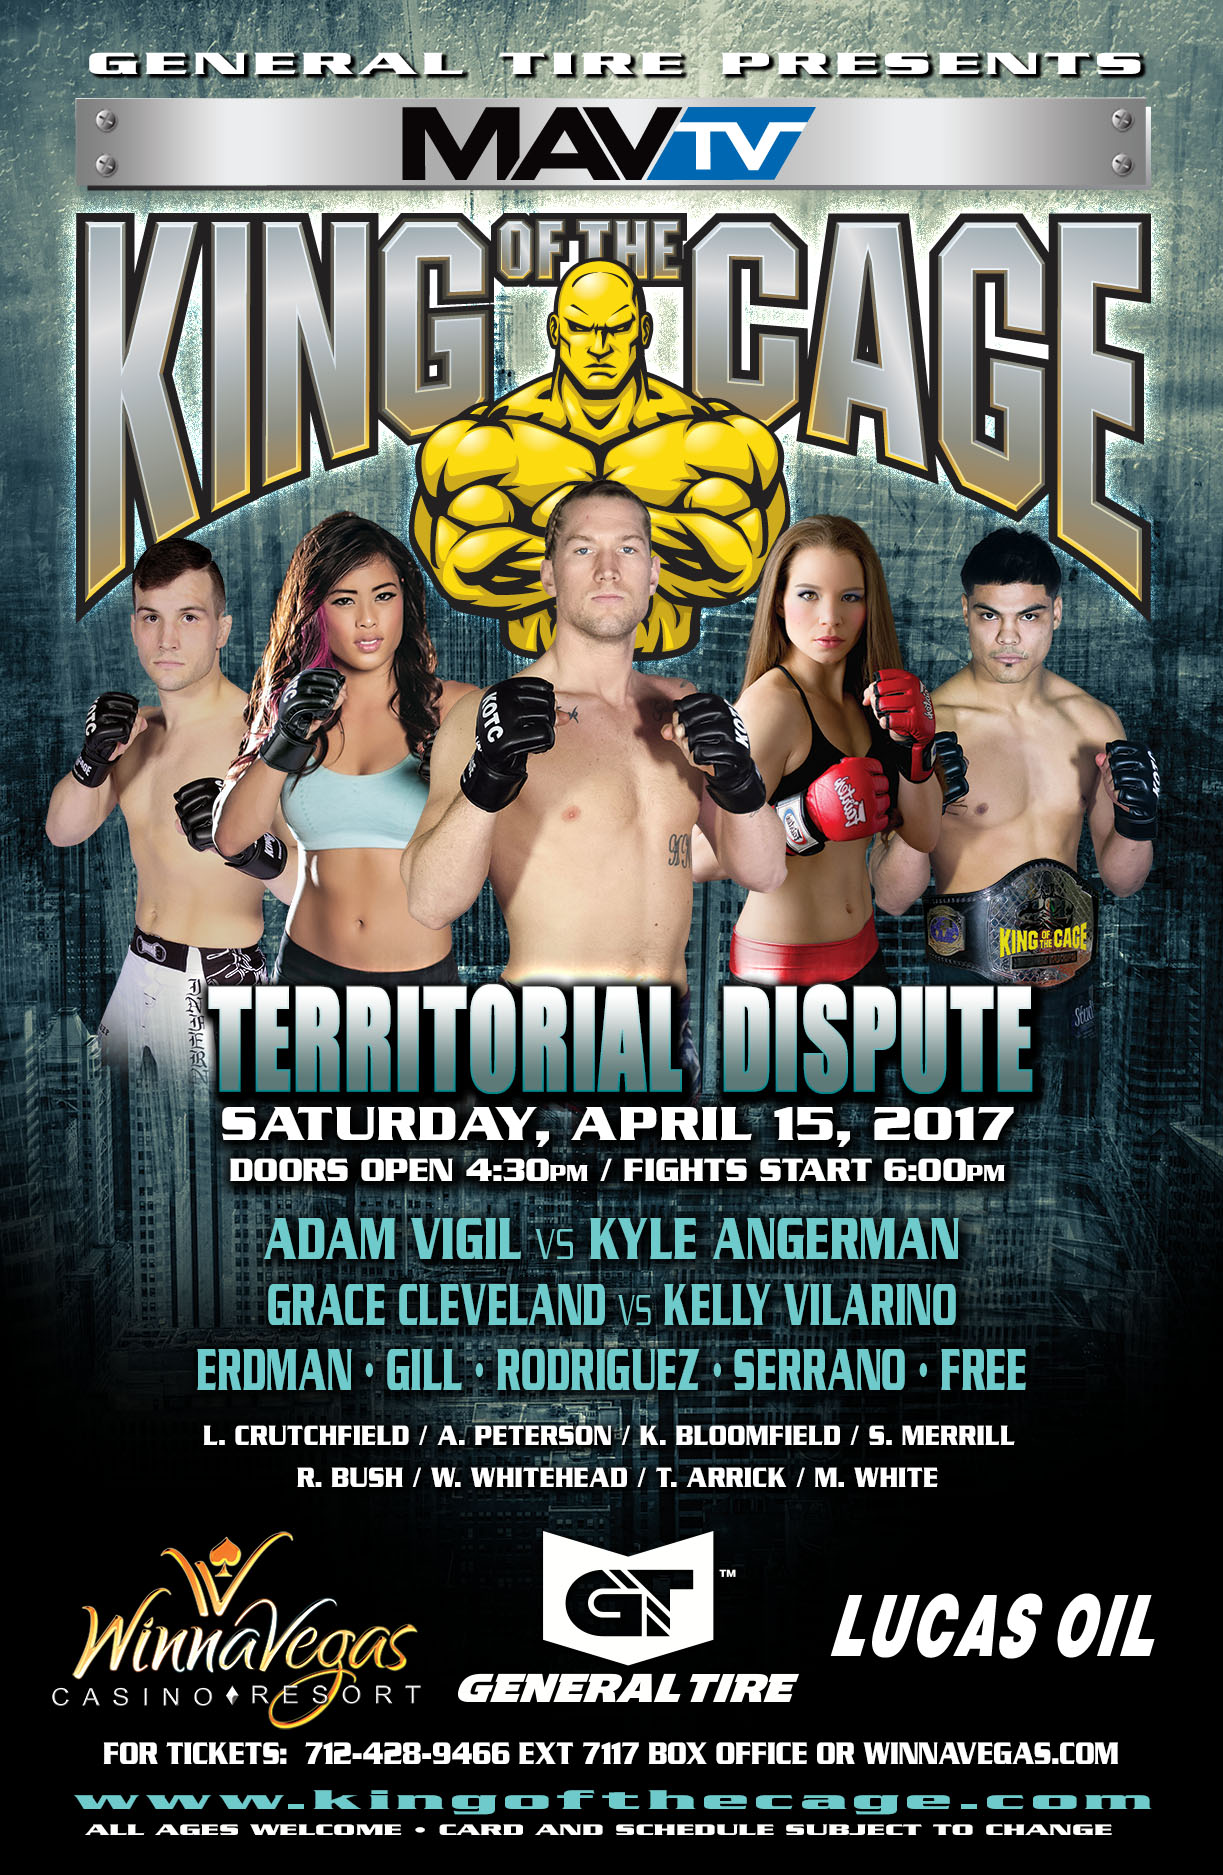 King of the Cage Returns to WinnaVegas Casino Resort on April 15 for “TERRITORIAL DISPUTE”